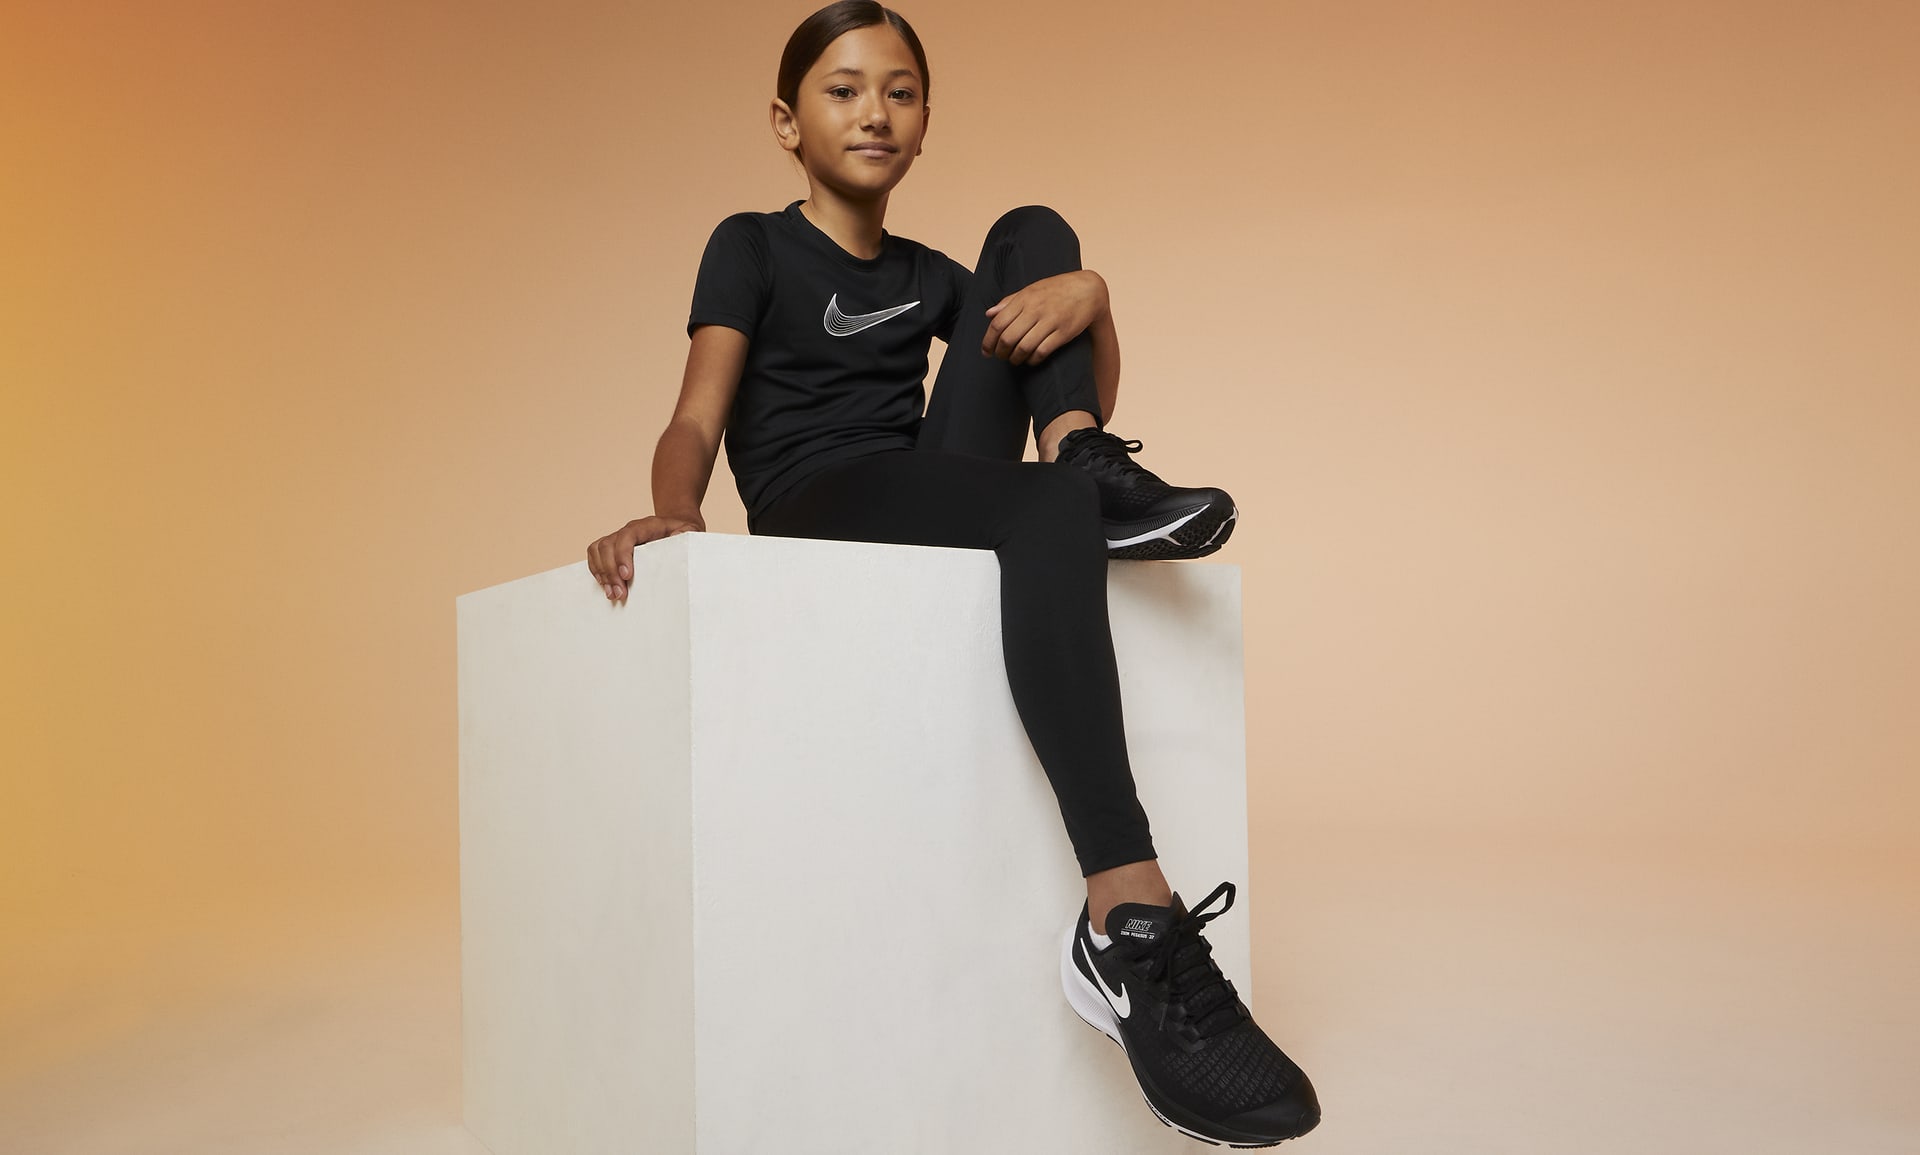 Nike One Big Kids\' (Girls\') Dri-FIT Short-Sleeve Training Top.